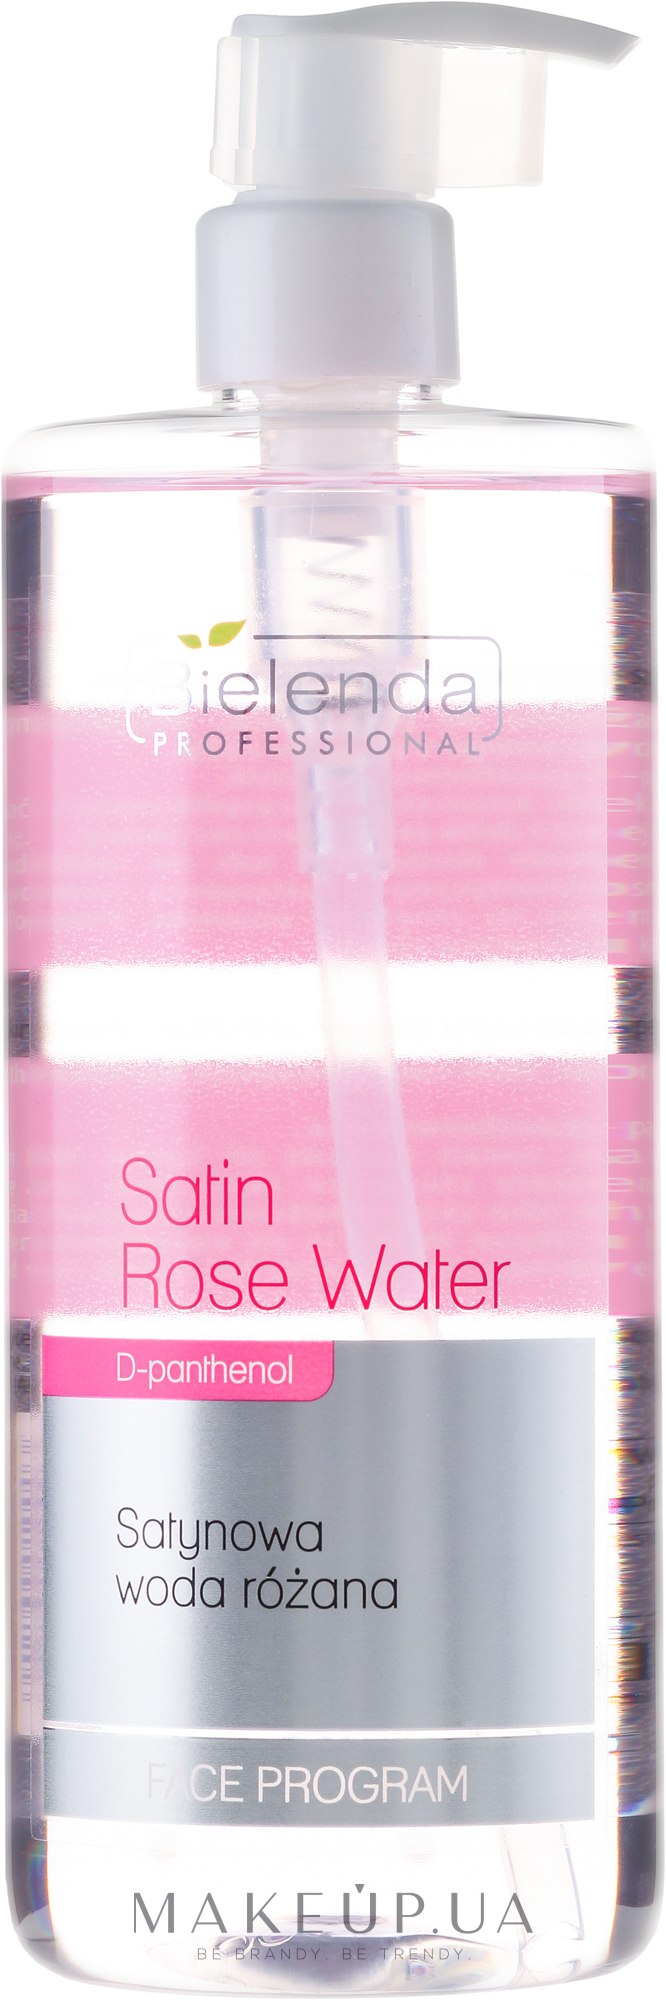 Сатиновая розовая вода - Bielenda Professional Face Program Satin Rose Water — фото 500ml